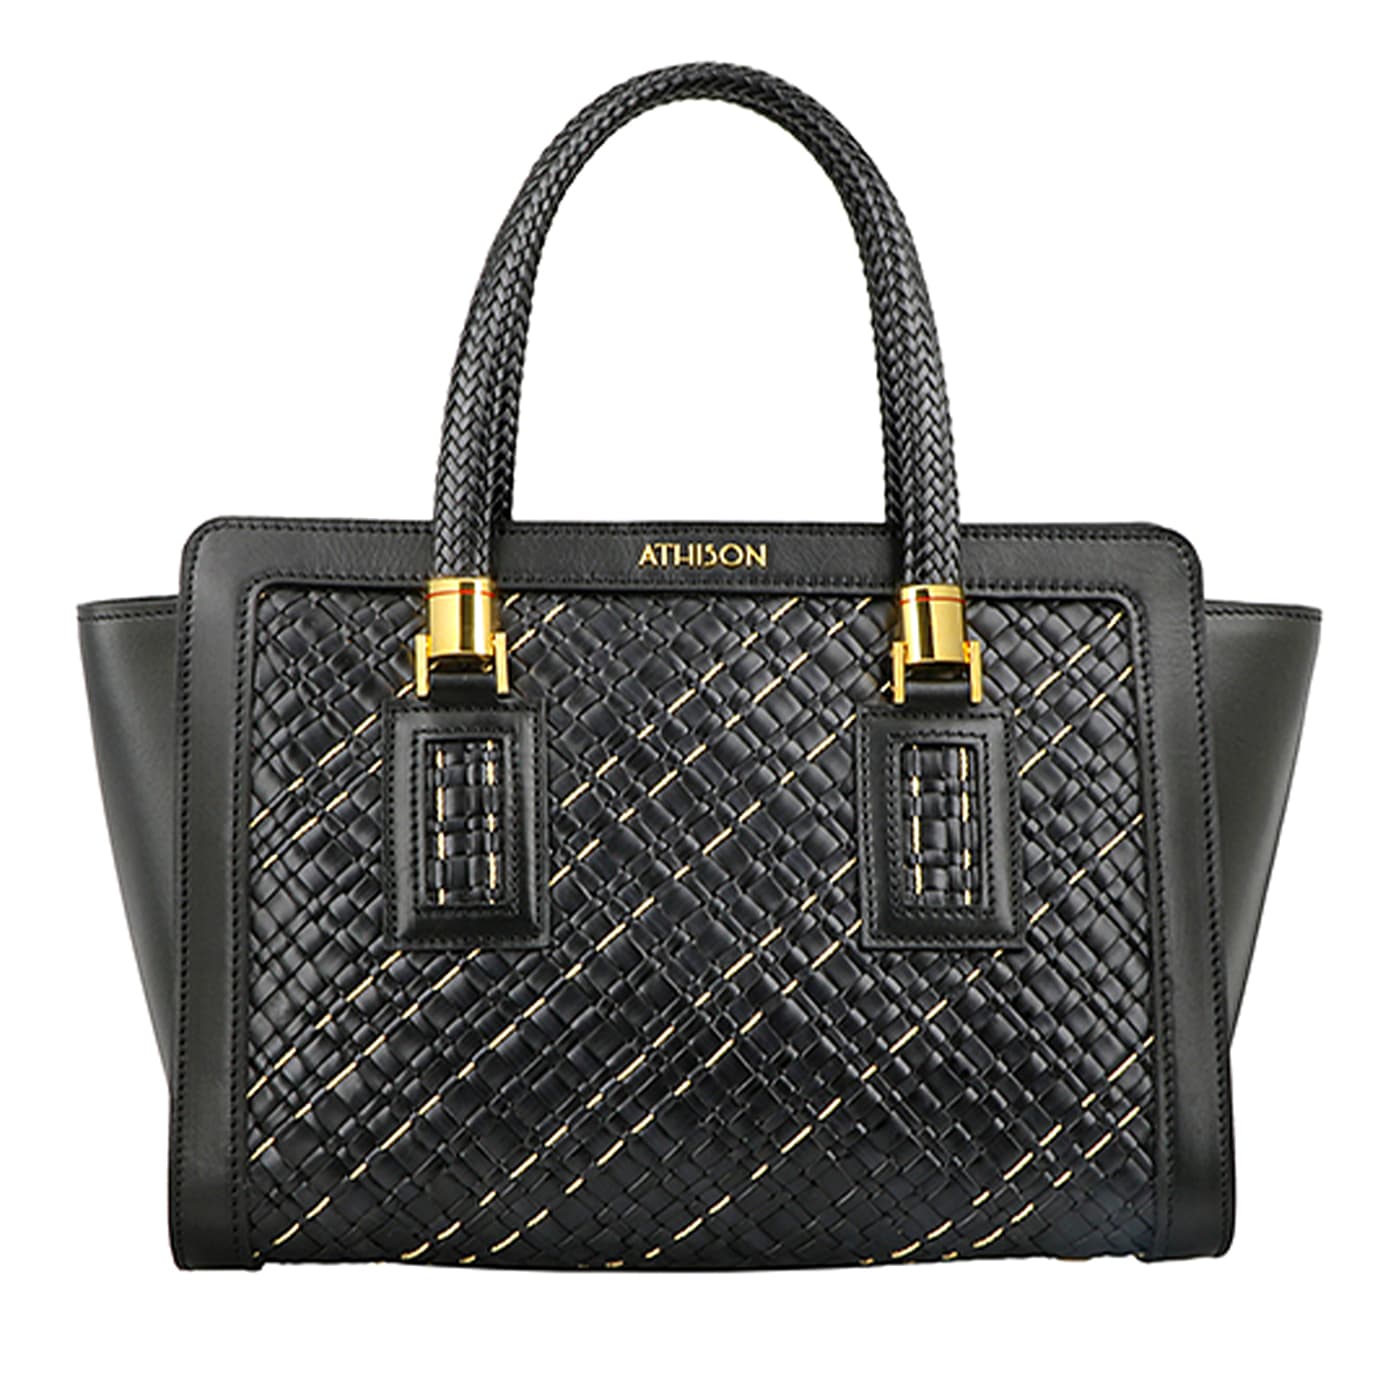 Cistella Braided Leather and Copper Black Handbag - Athison